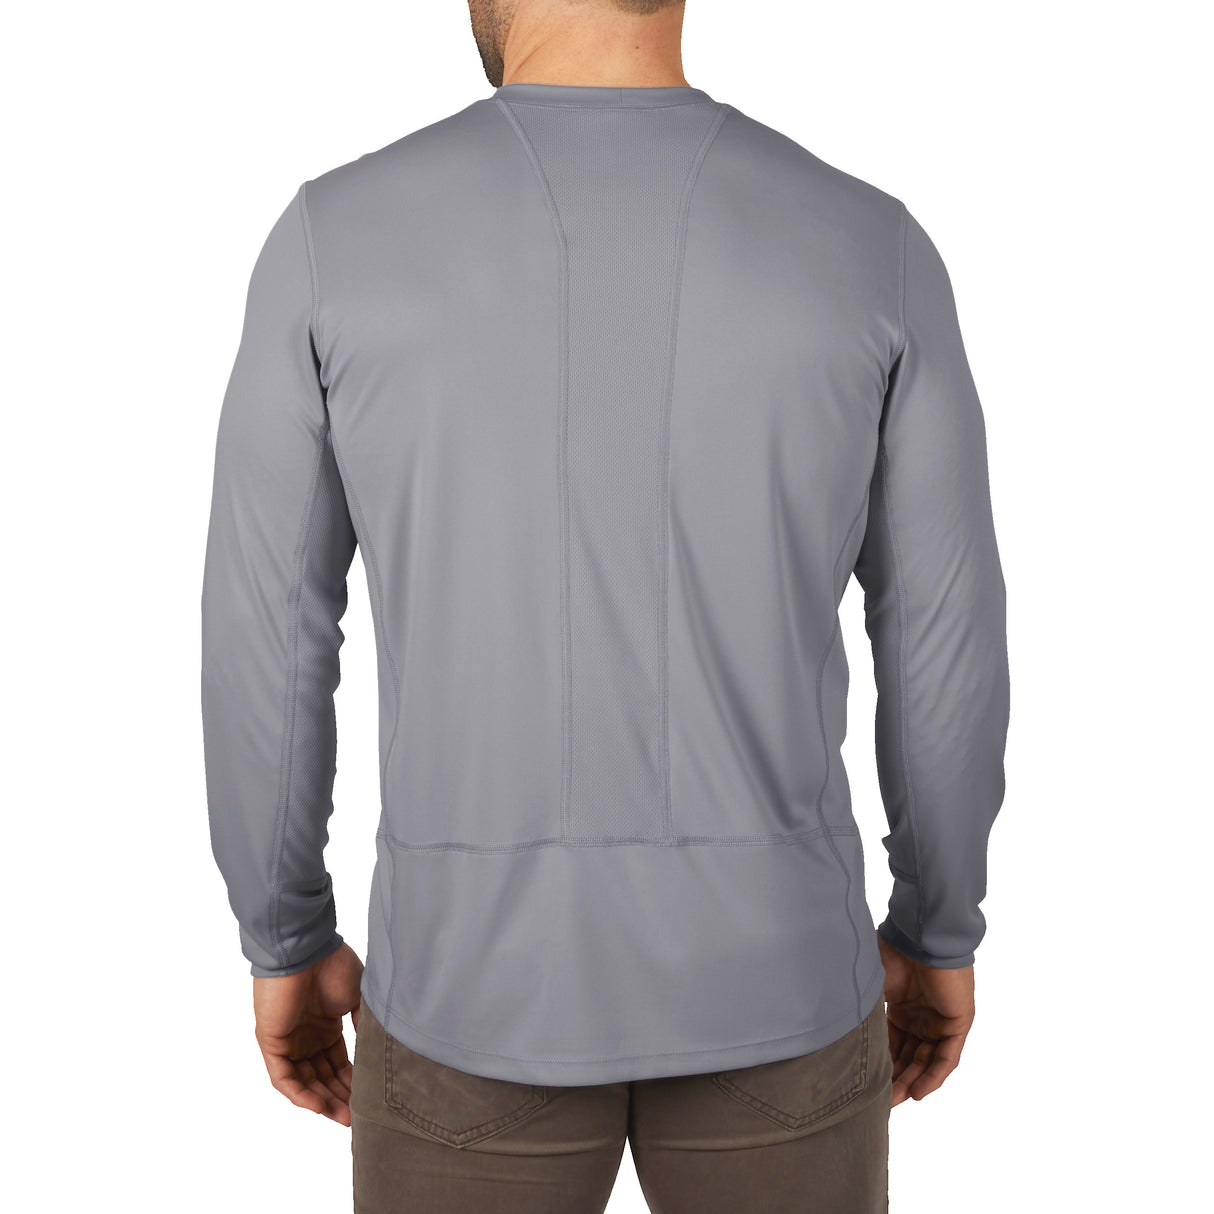 Milwaukee Funktions-Langarm-Shirt WWLSG-XL 4933478191 roteswerkzeug